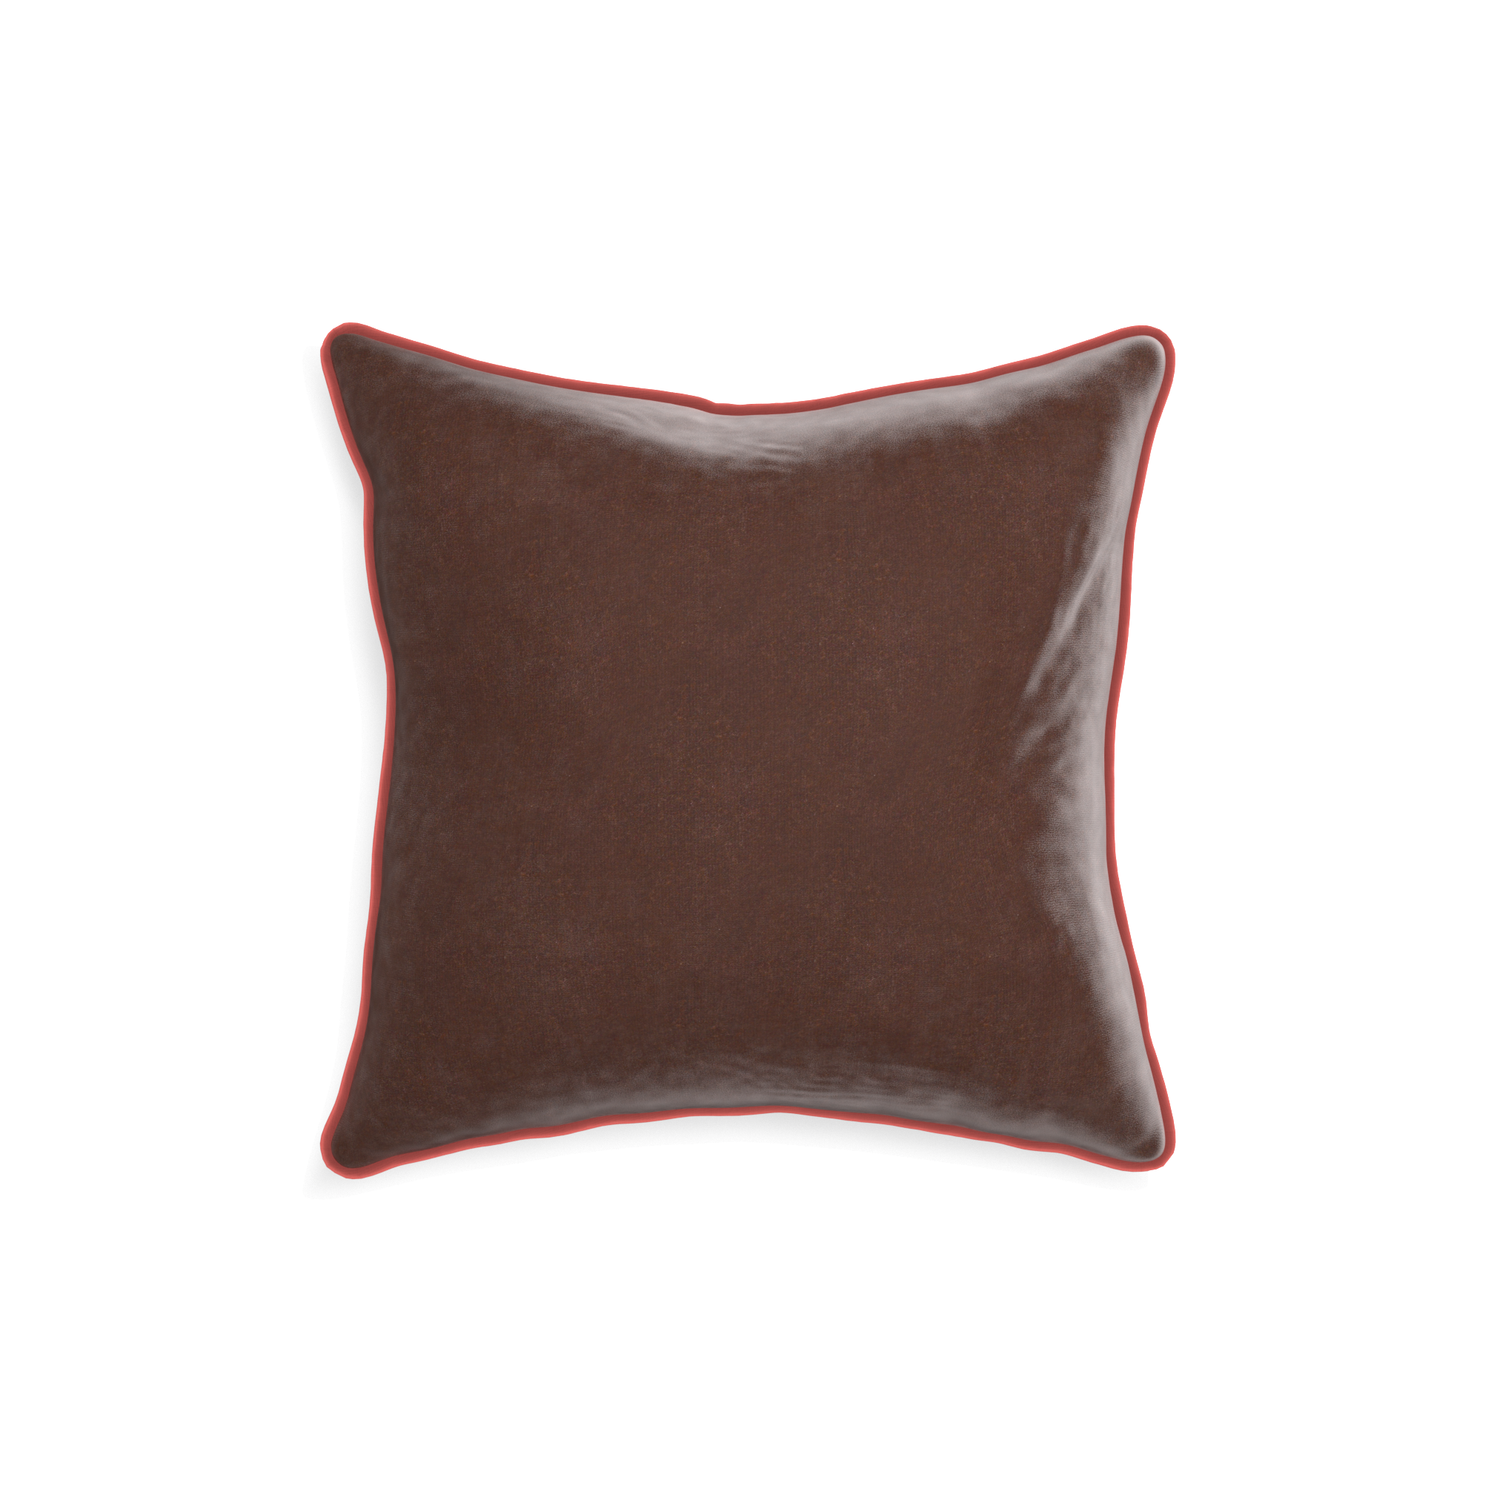 18-square walnut velvet custom pillow with c piping on white background